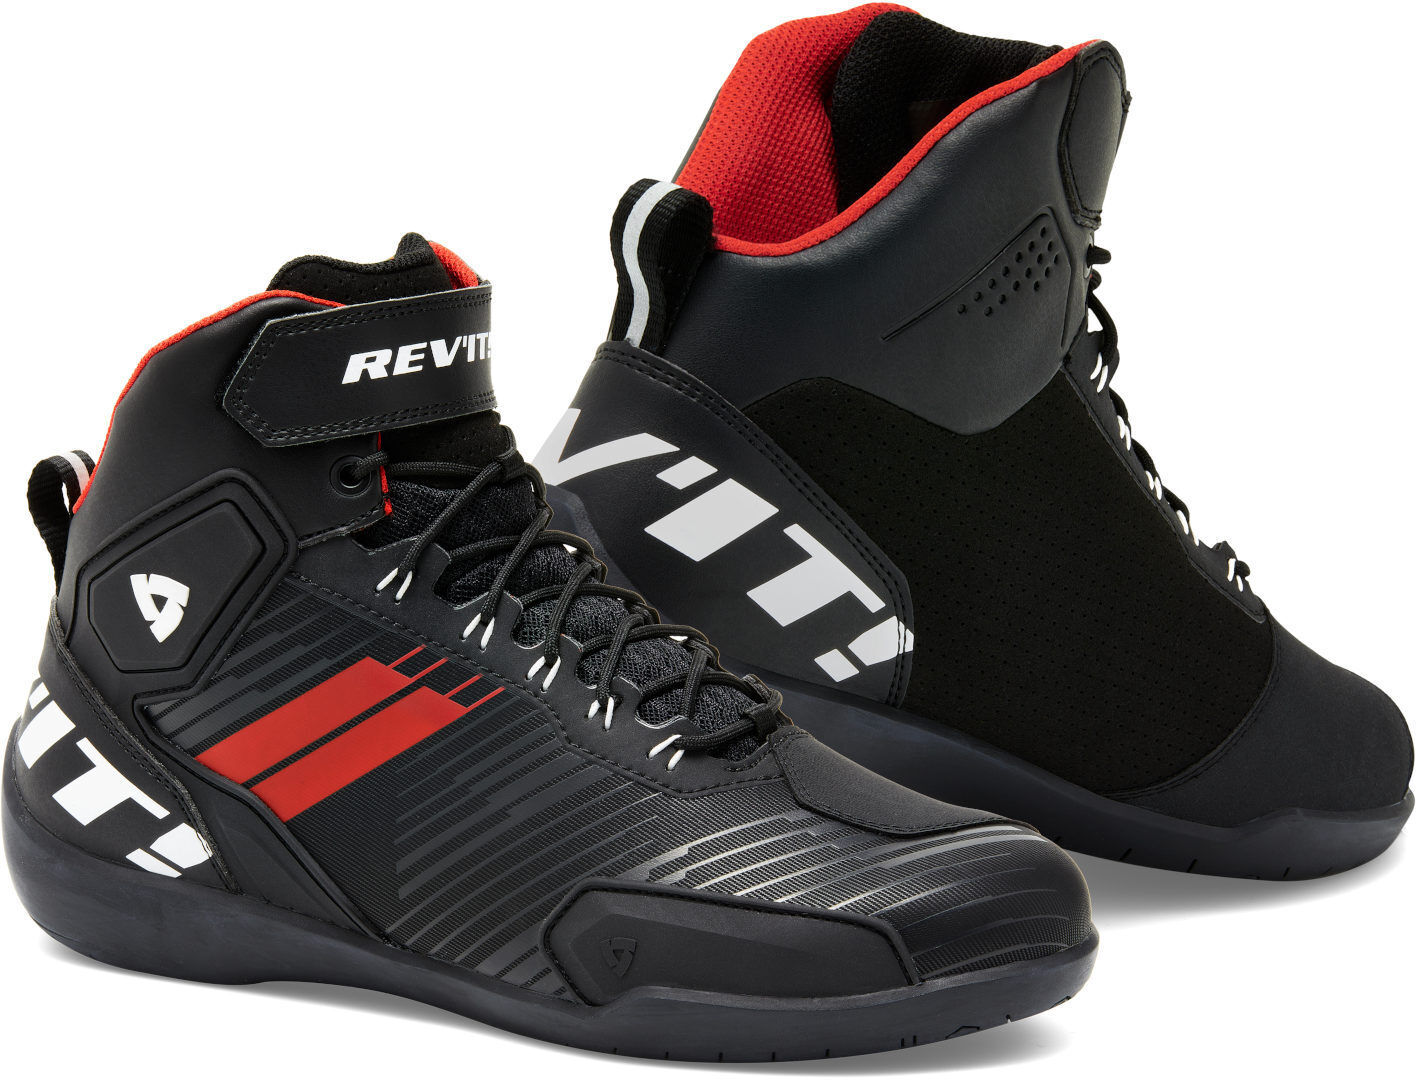 Revit G-Force Zapatos de motocicleta - Negro Blanco Rojo (44)